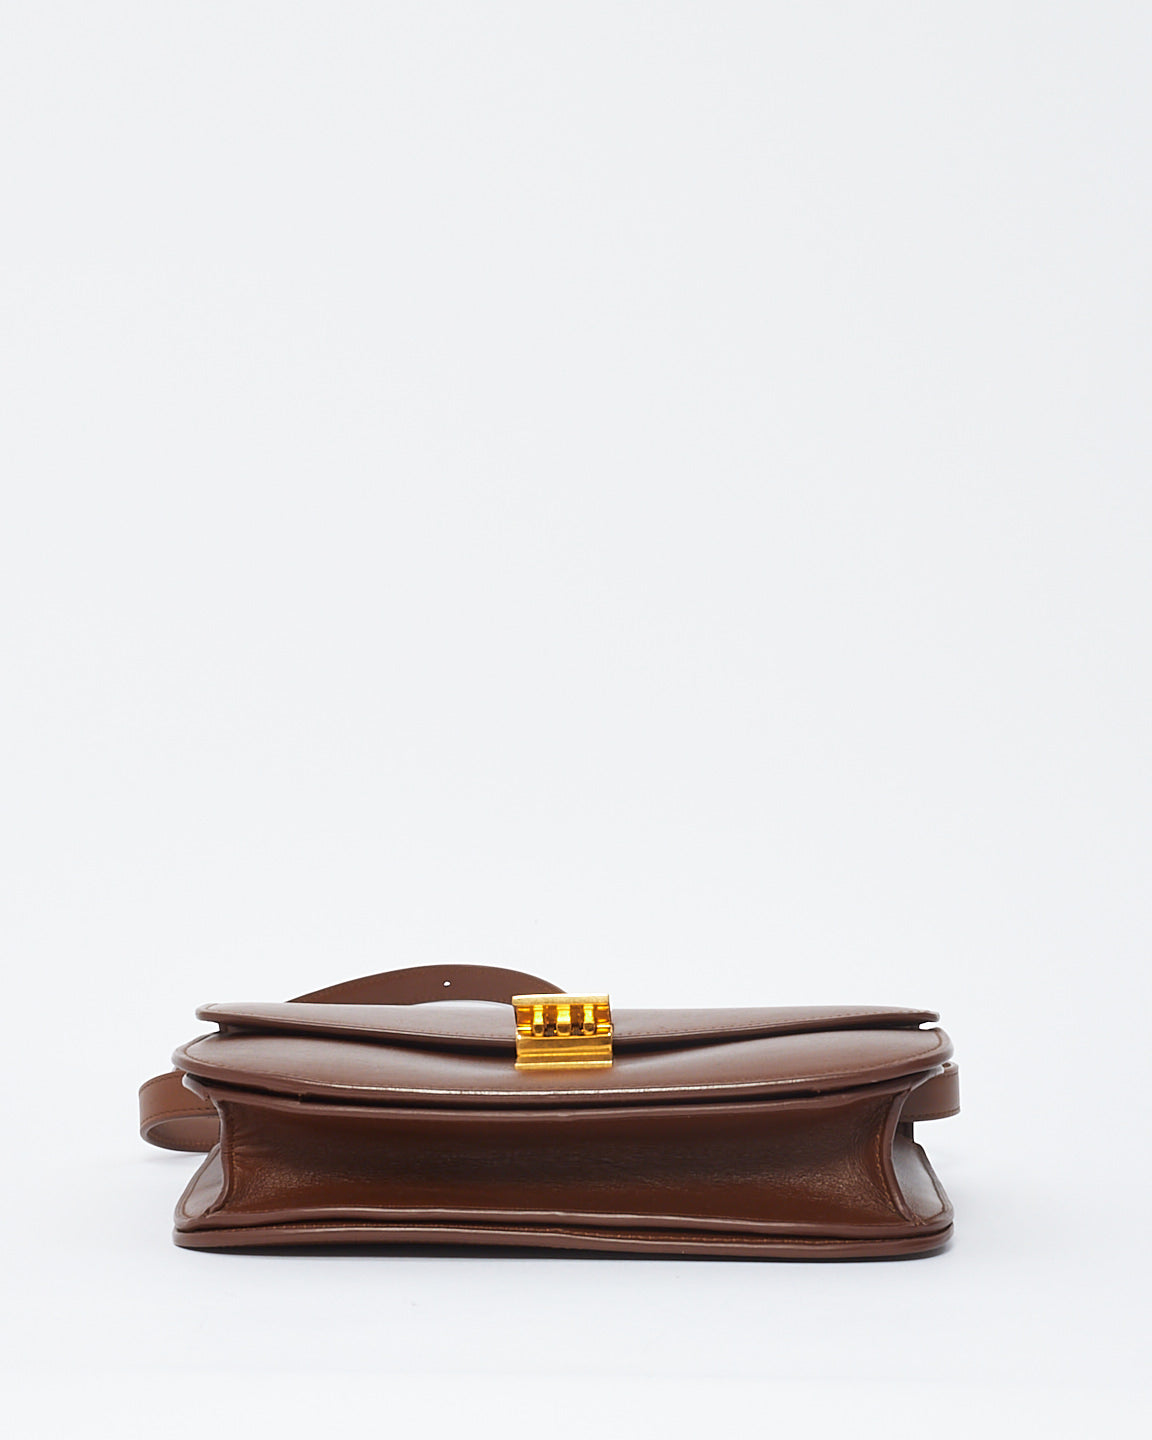 Celine Tan Box Calfskin Leather Medium Classic Bag